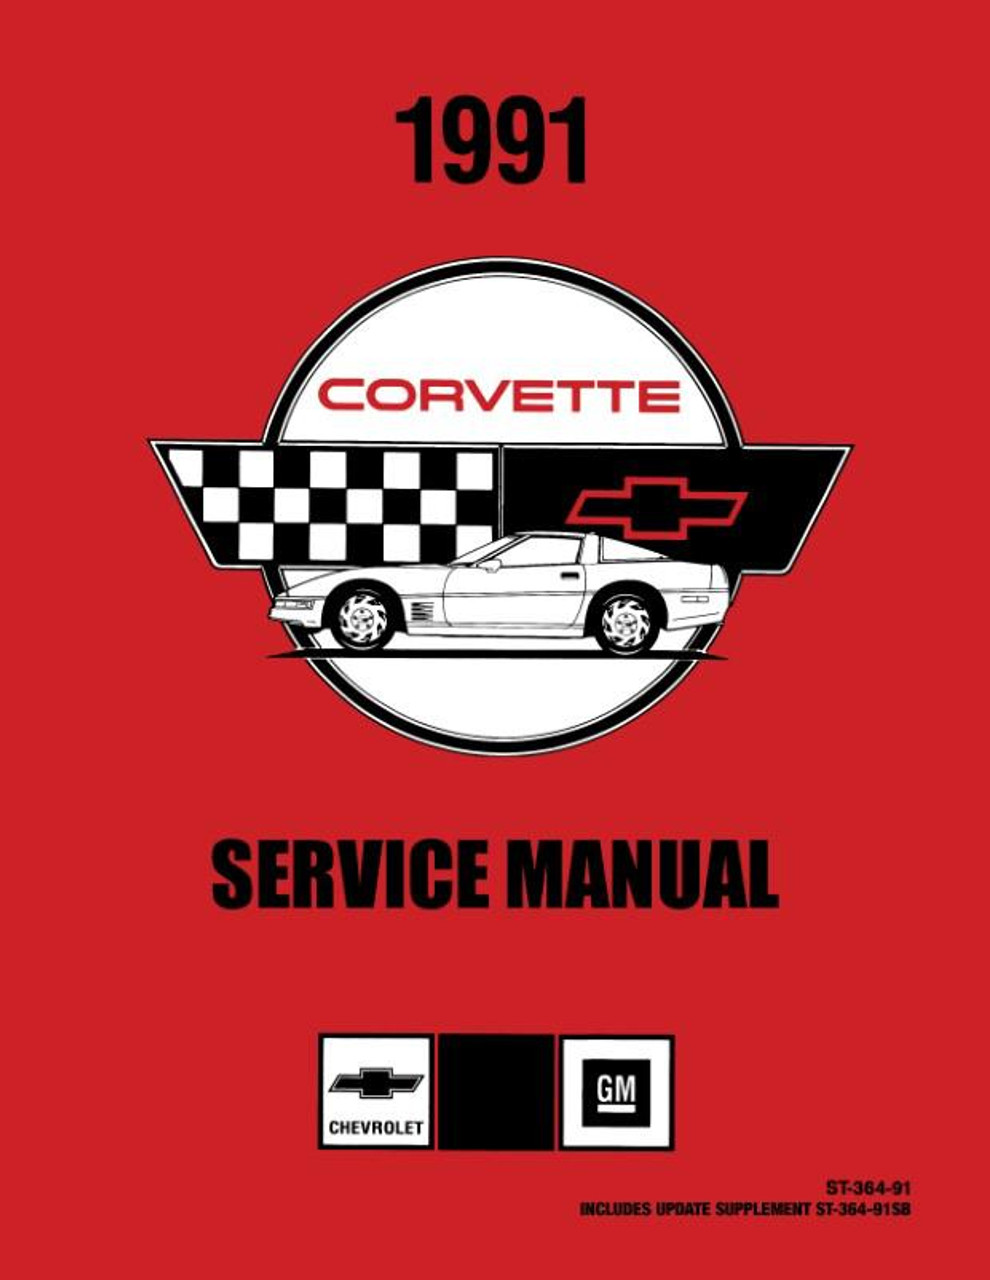 1991-chevy-corvette-service-manual-7__11711.1660255099.jpg